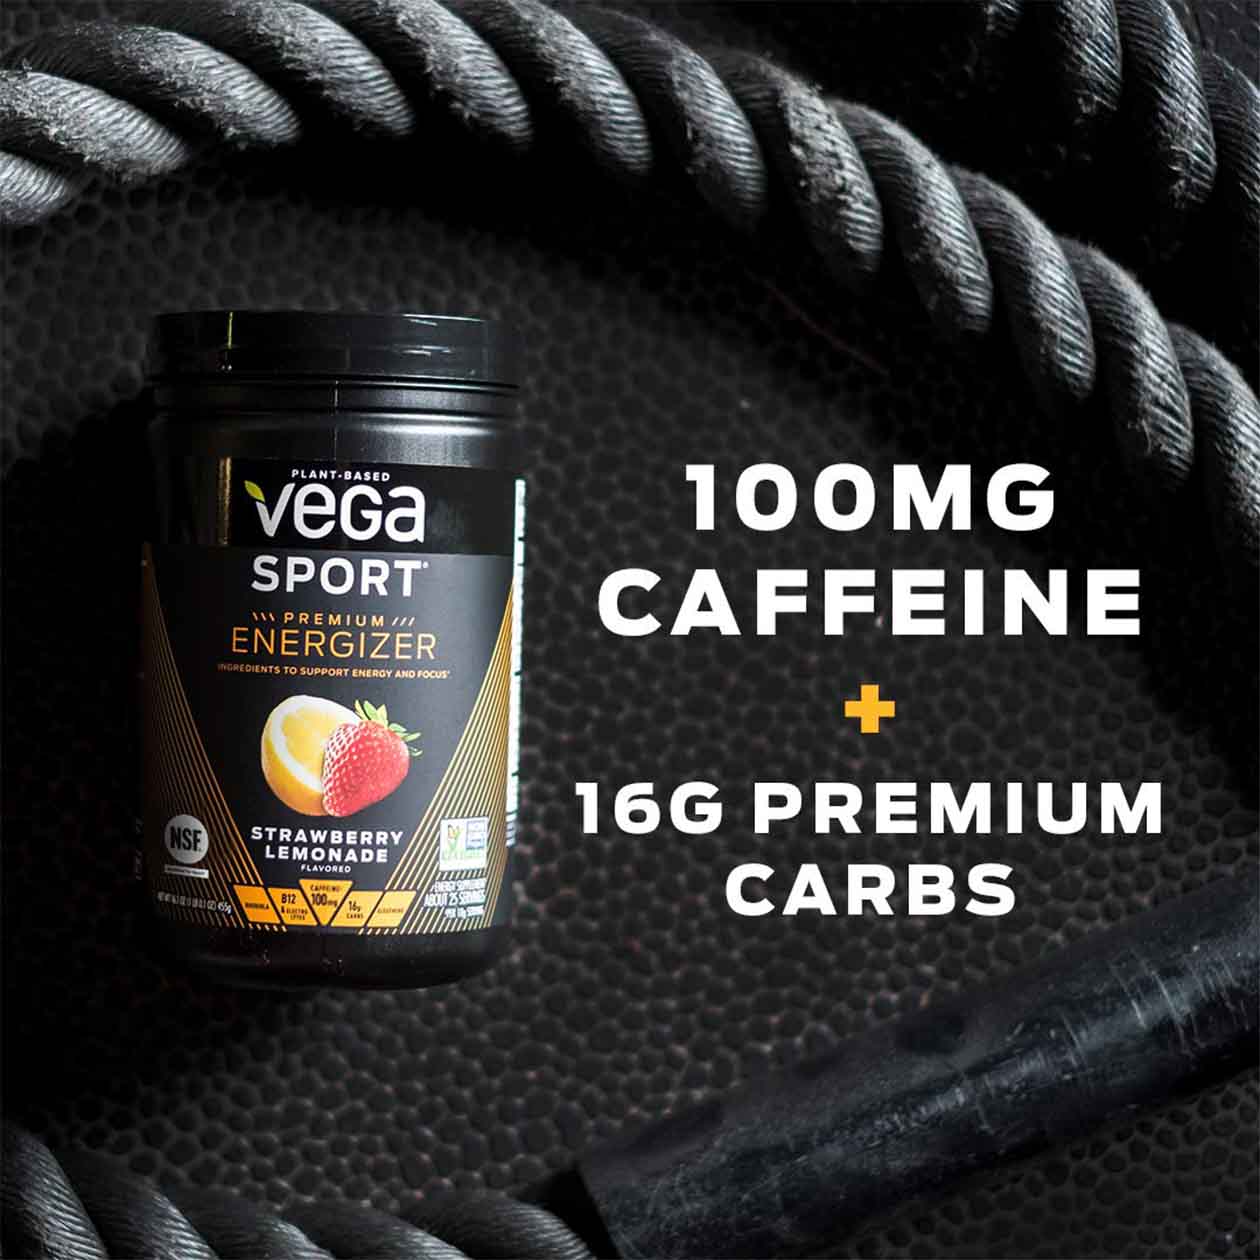 Vega Sport® Premium Pre-workout Energizer